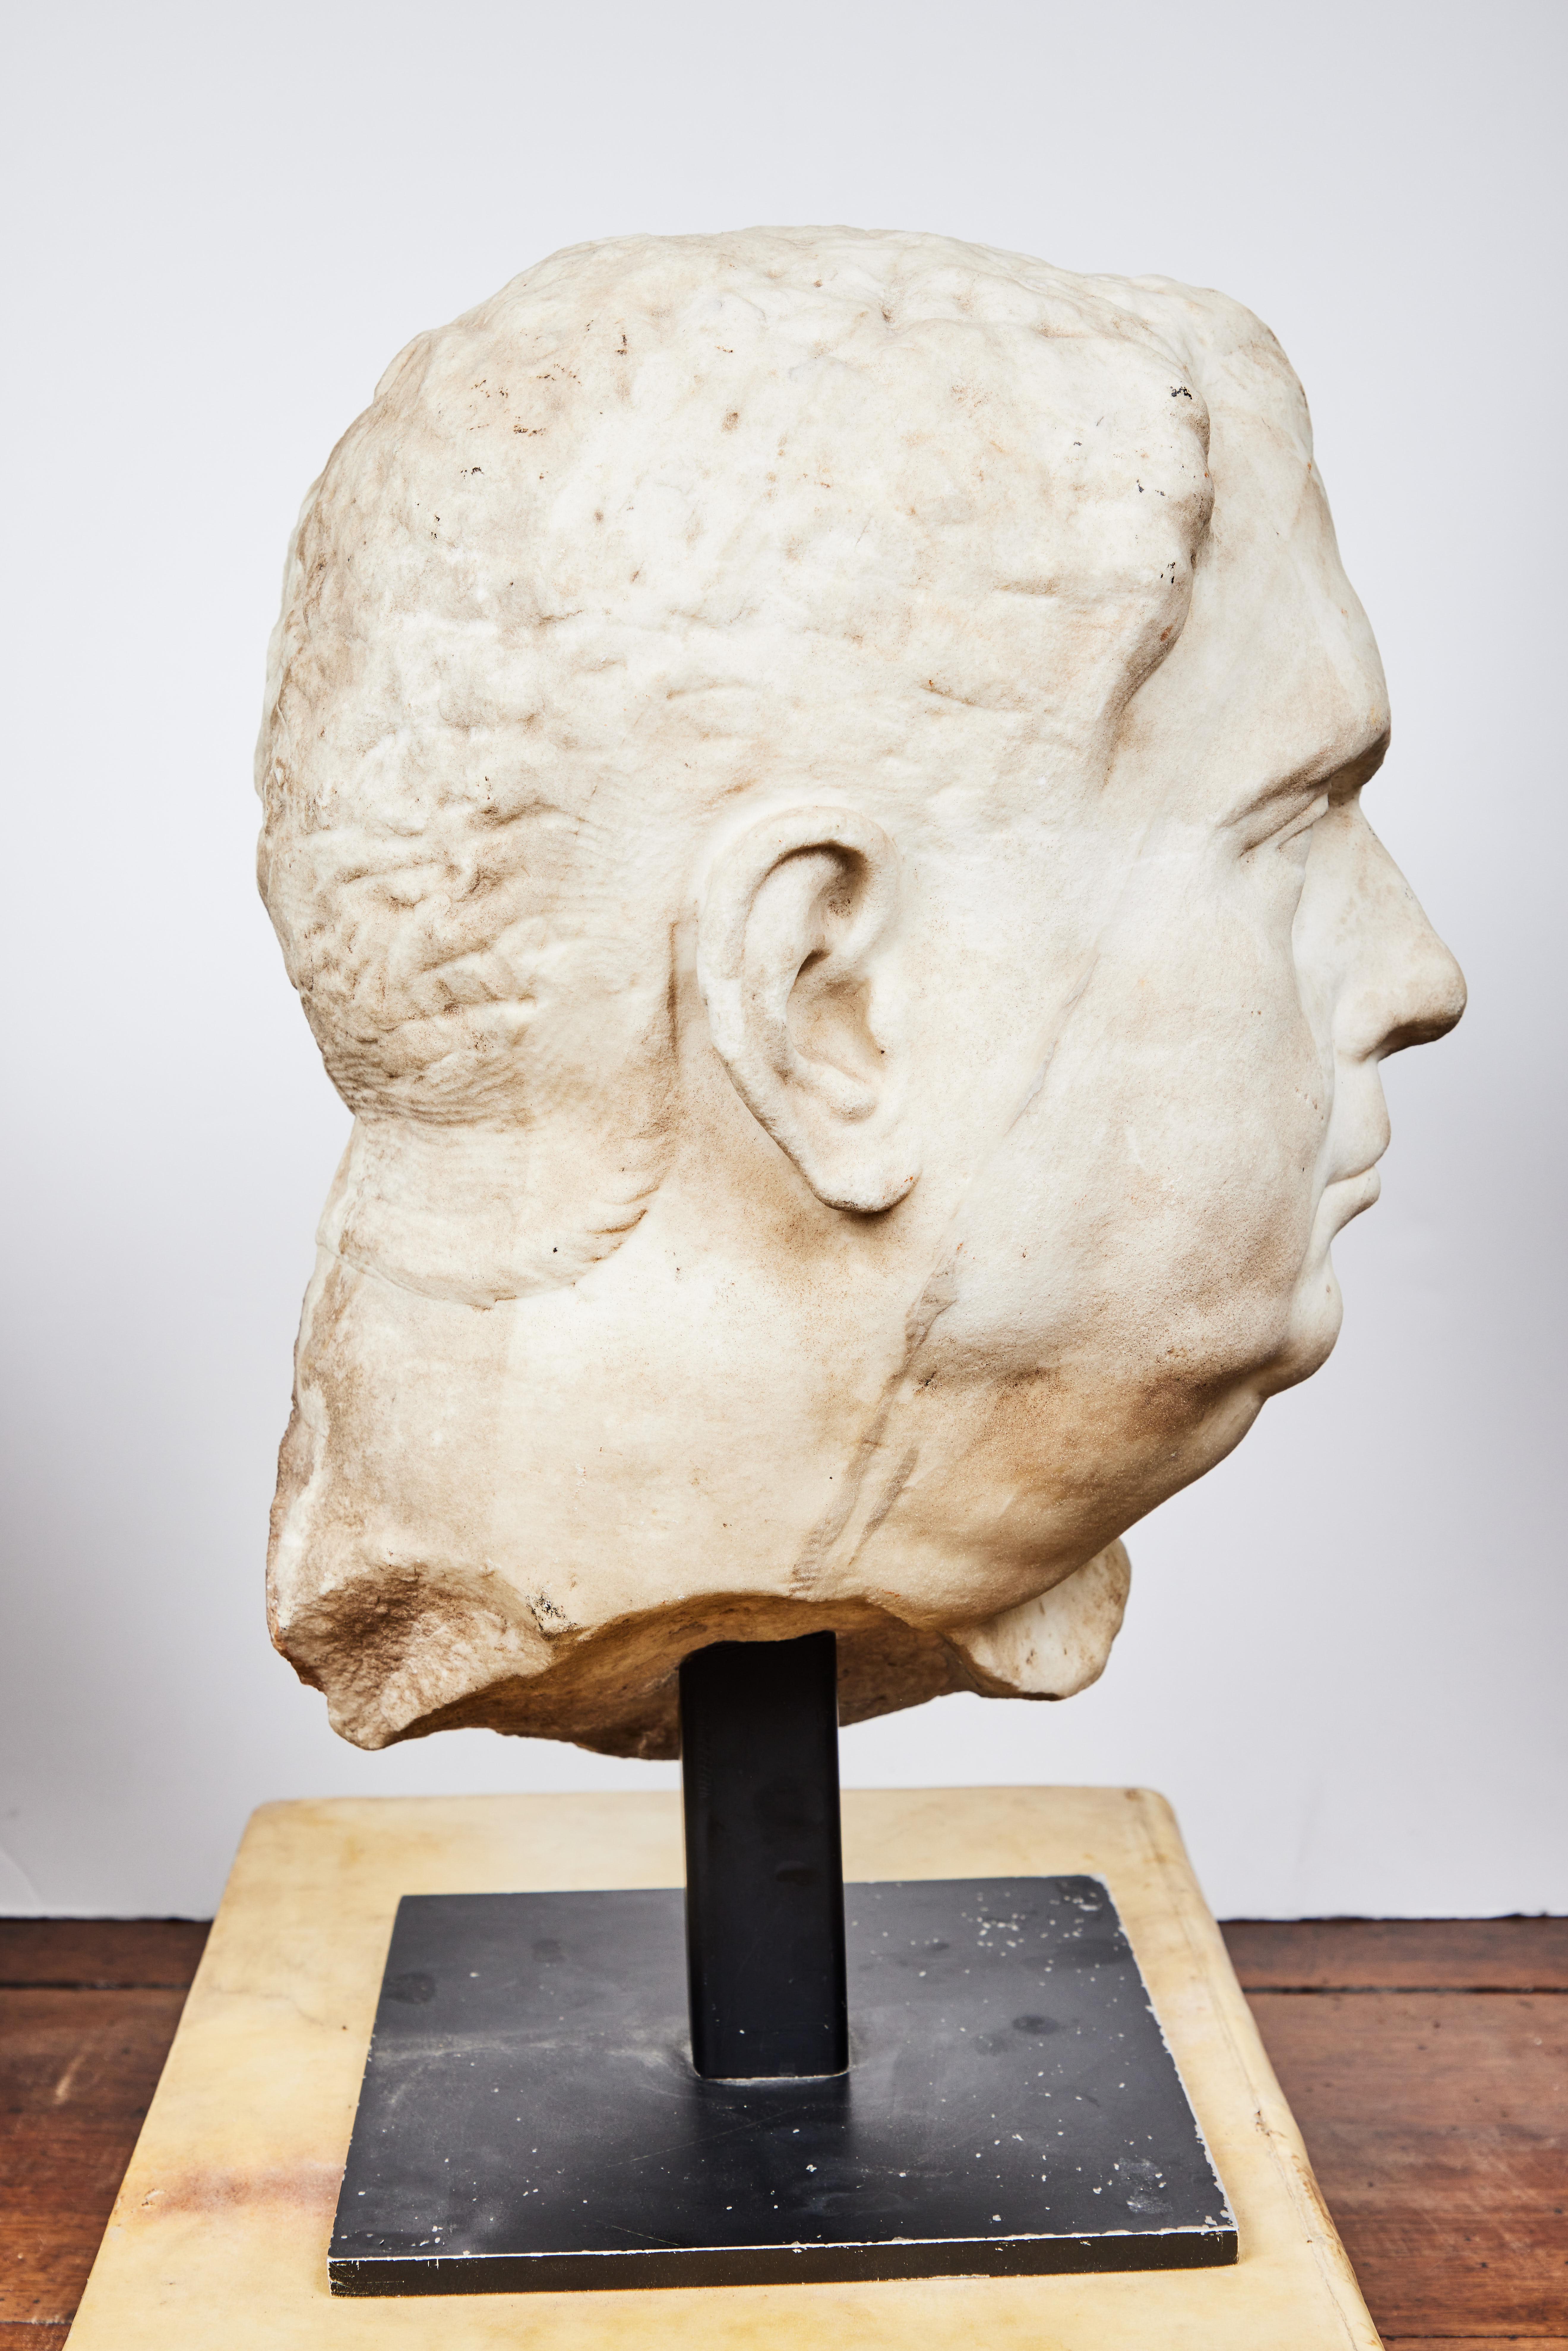 Antique Bust of Roman Emperor Vitellius - Beige Figurative Sculpture by Unknown